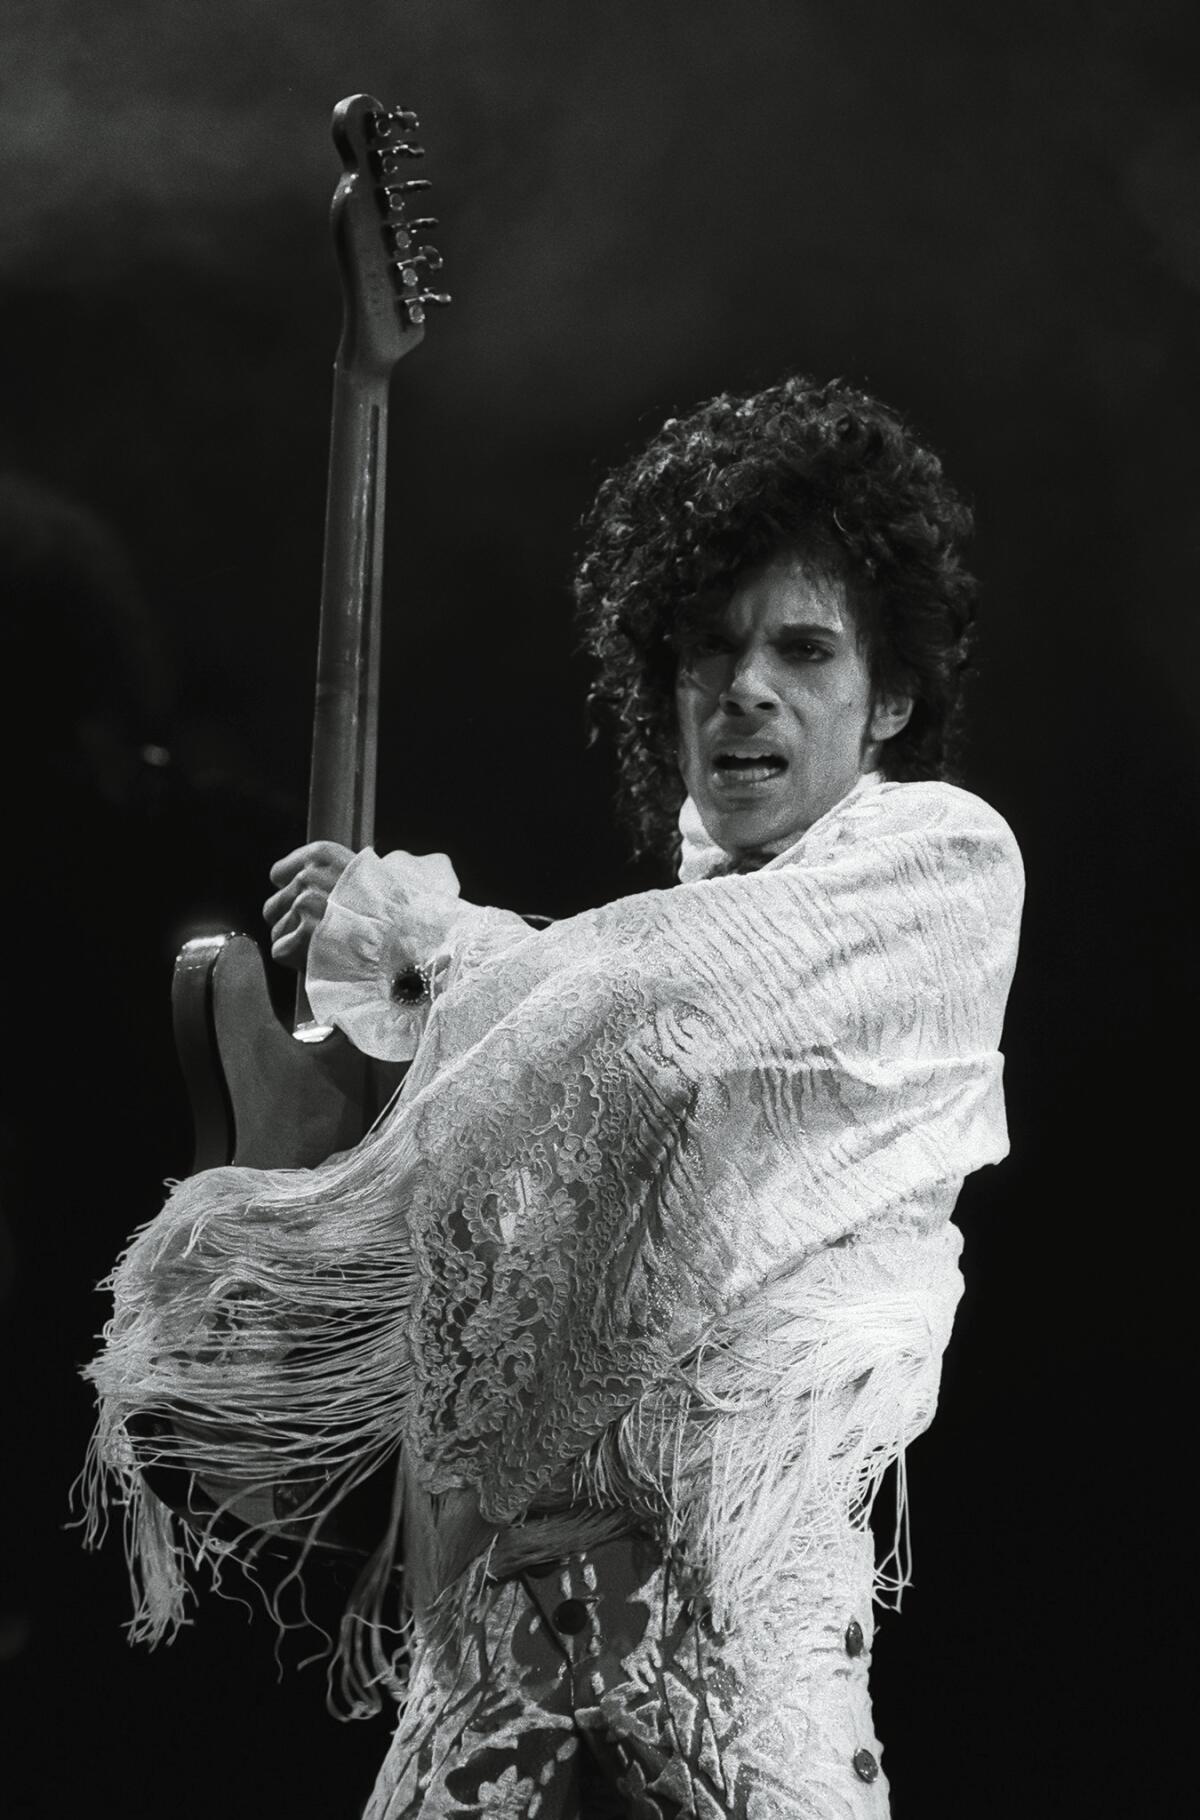 Prince at the Greensboro Coliseum in North Carolina, Nov. 14, 1984.